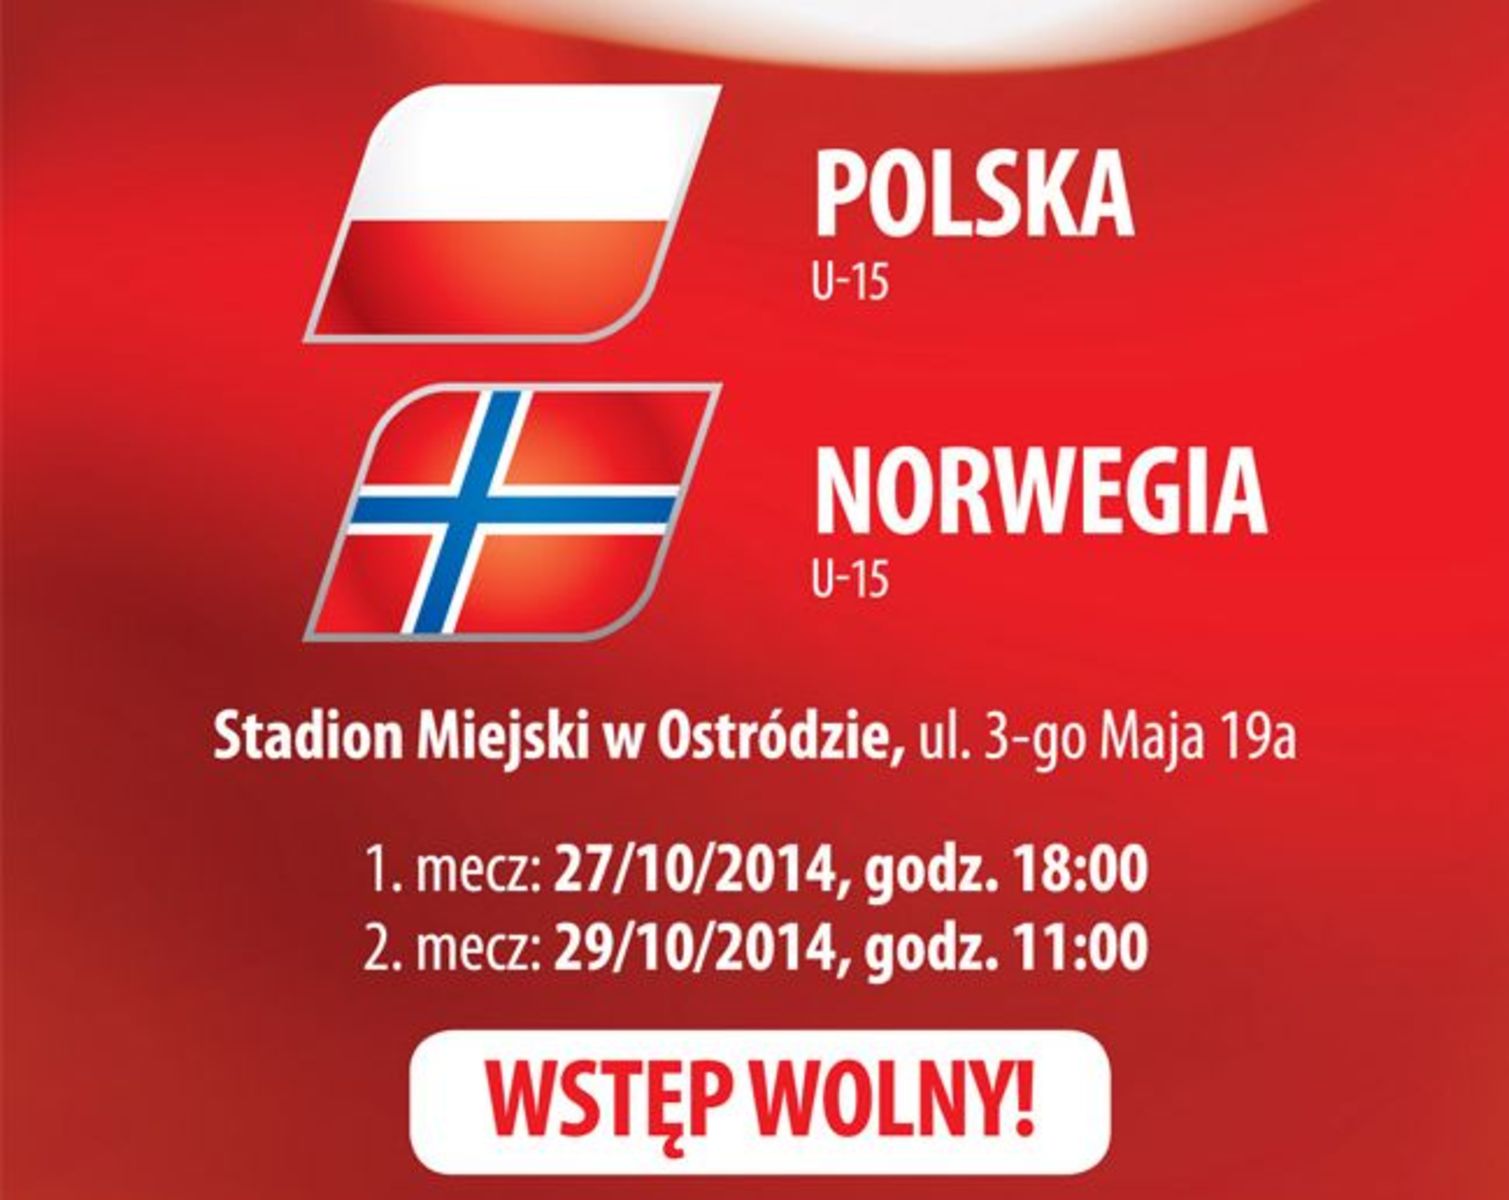 Plakat promujący mecz. Fot. wmzpn.pl